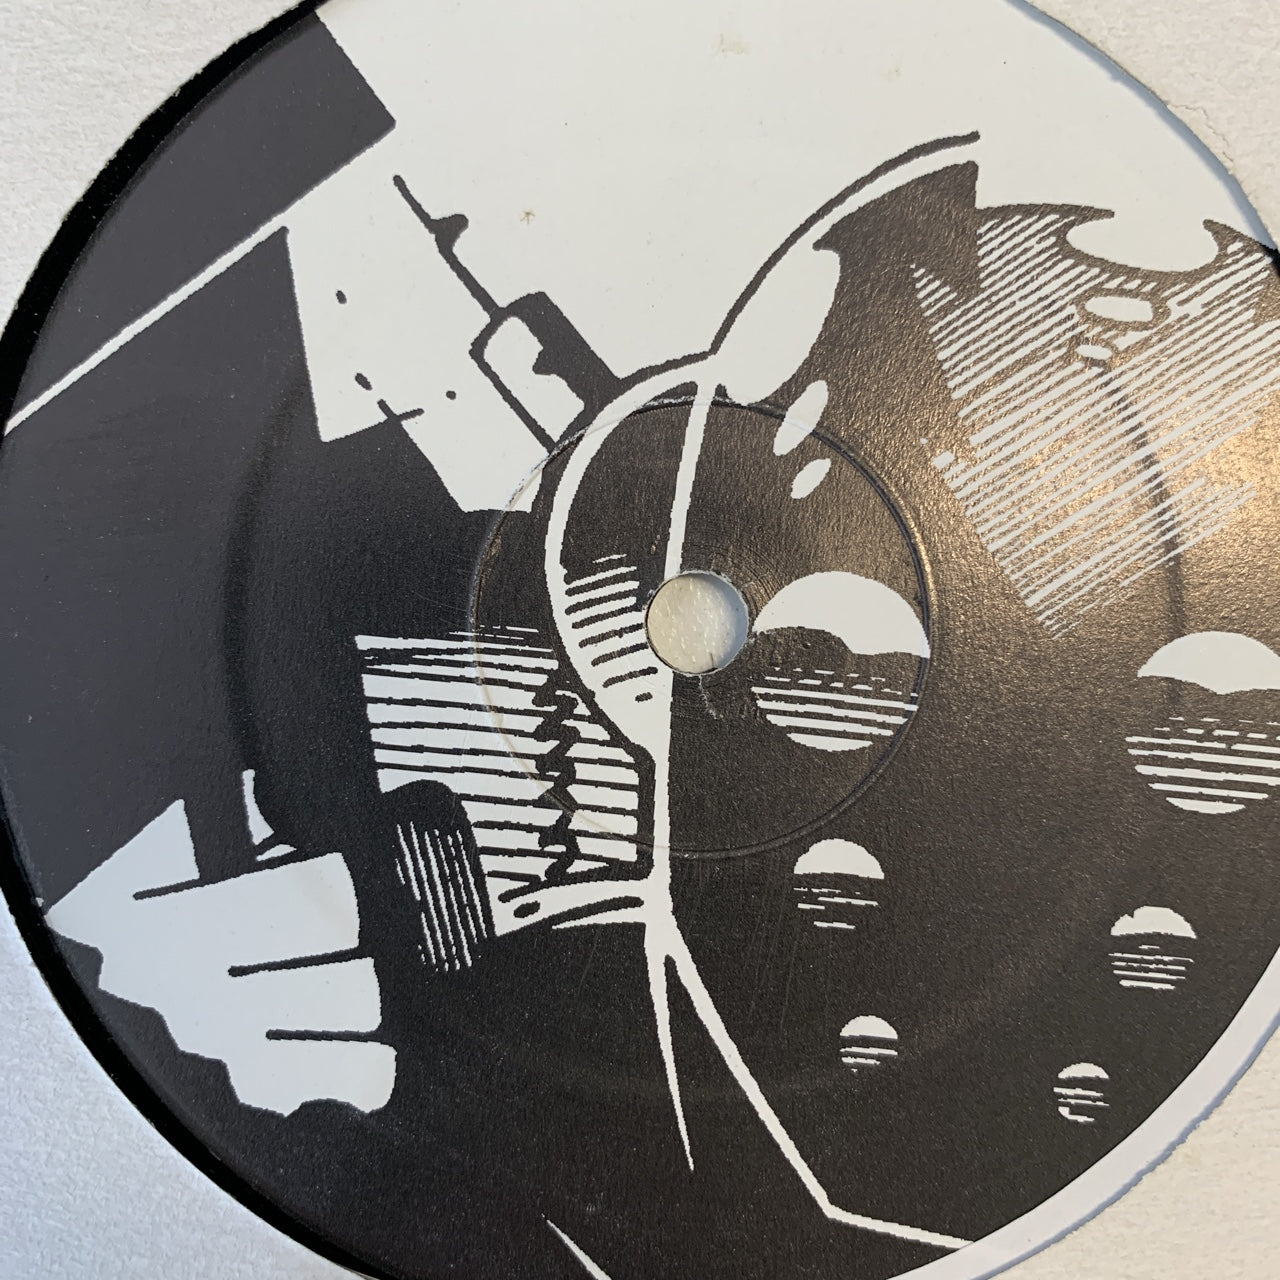 DJ ZE MIG-L ‘Shmakele mekele’ ep 4 Track 12inch Vinyl Single on DJAX